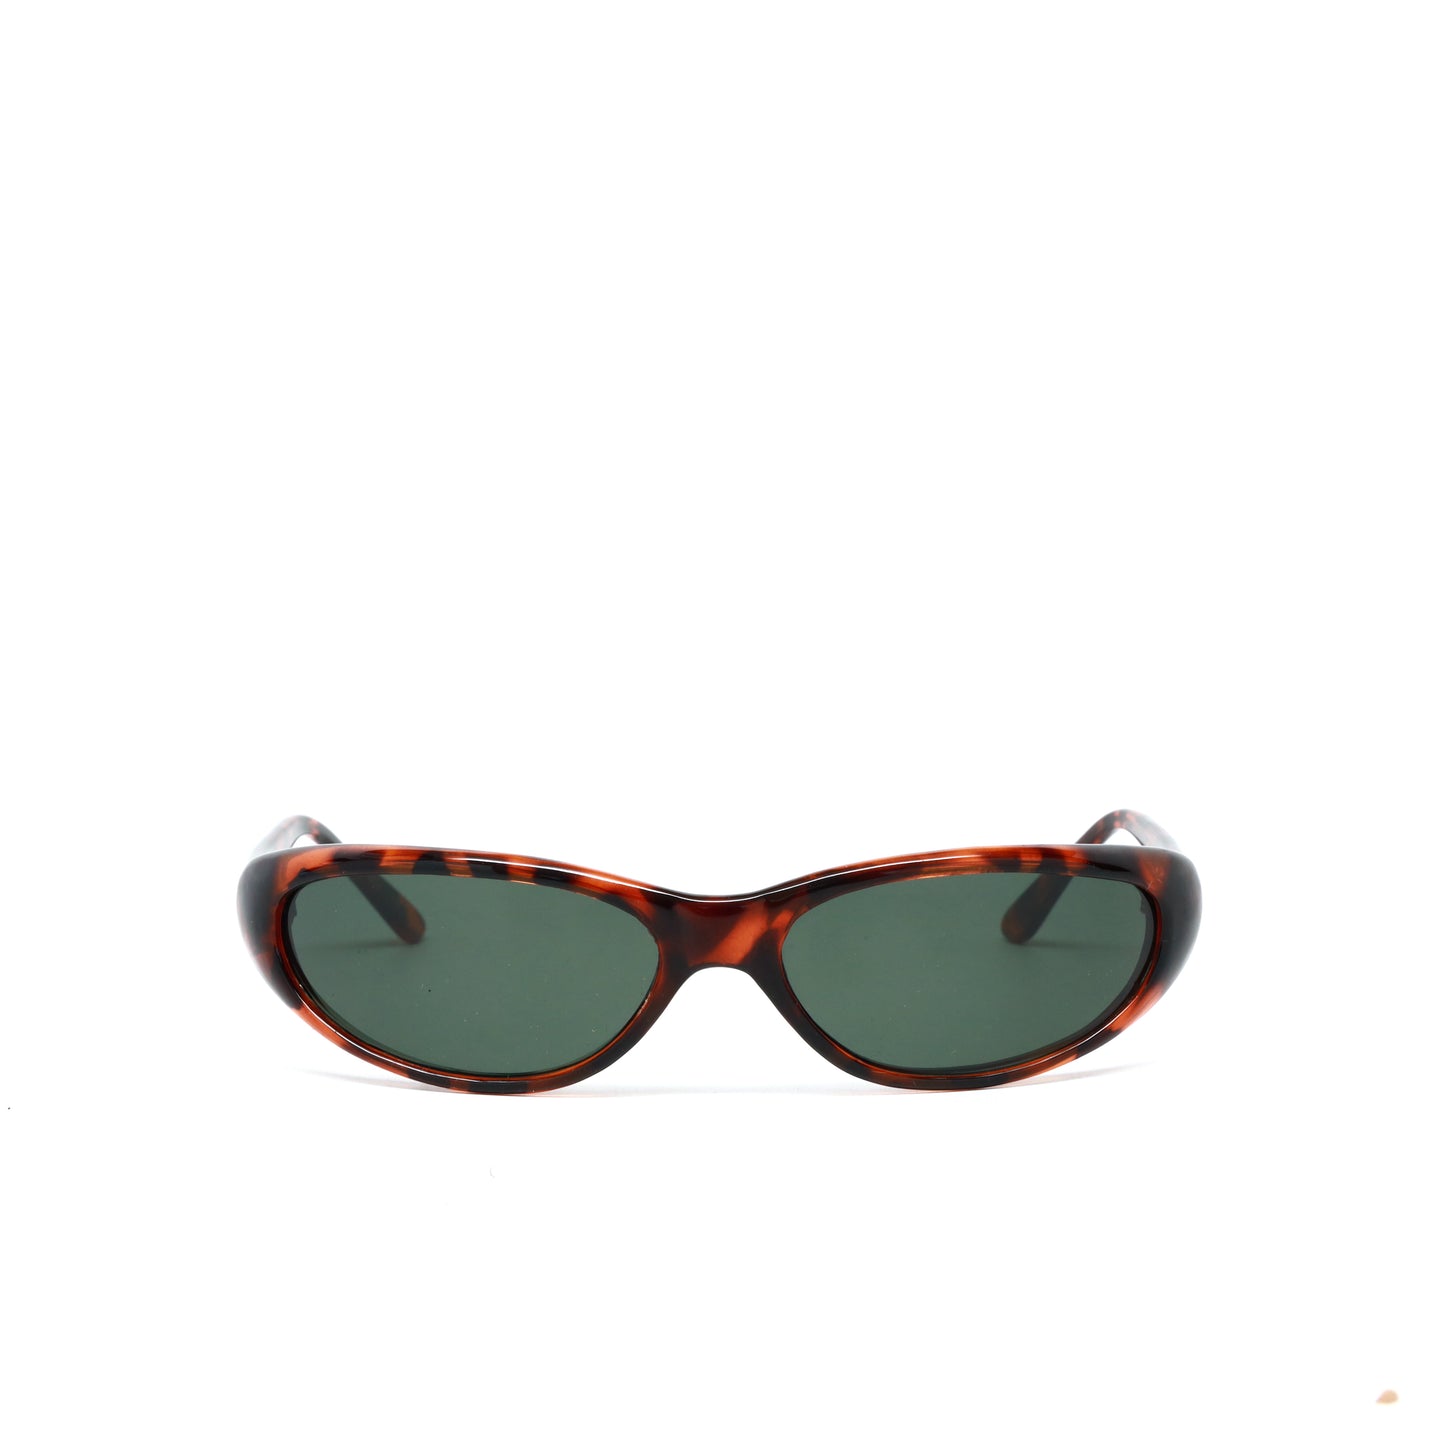 Vintage Standard Size Slim Narrow Oval Frame Sunglasses - Tortoise